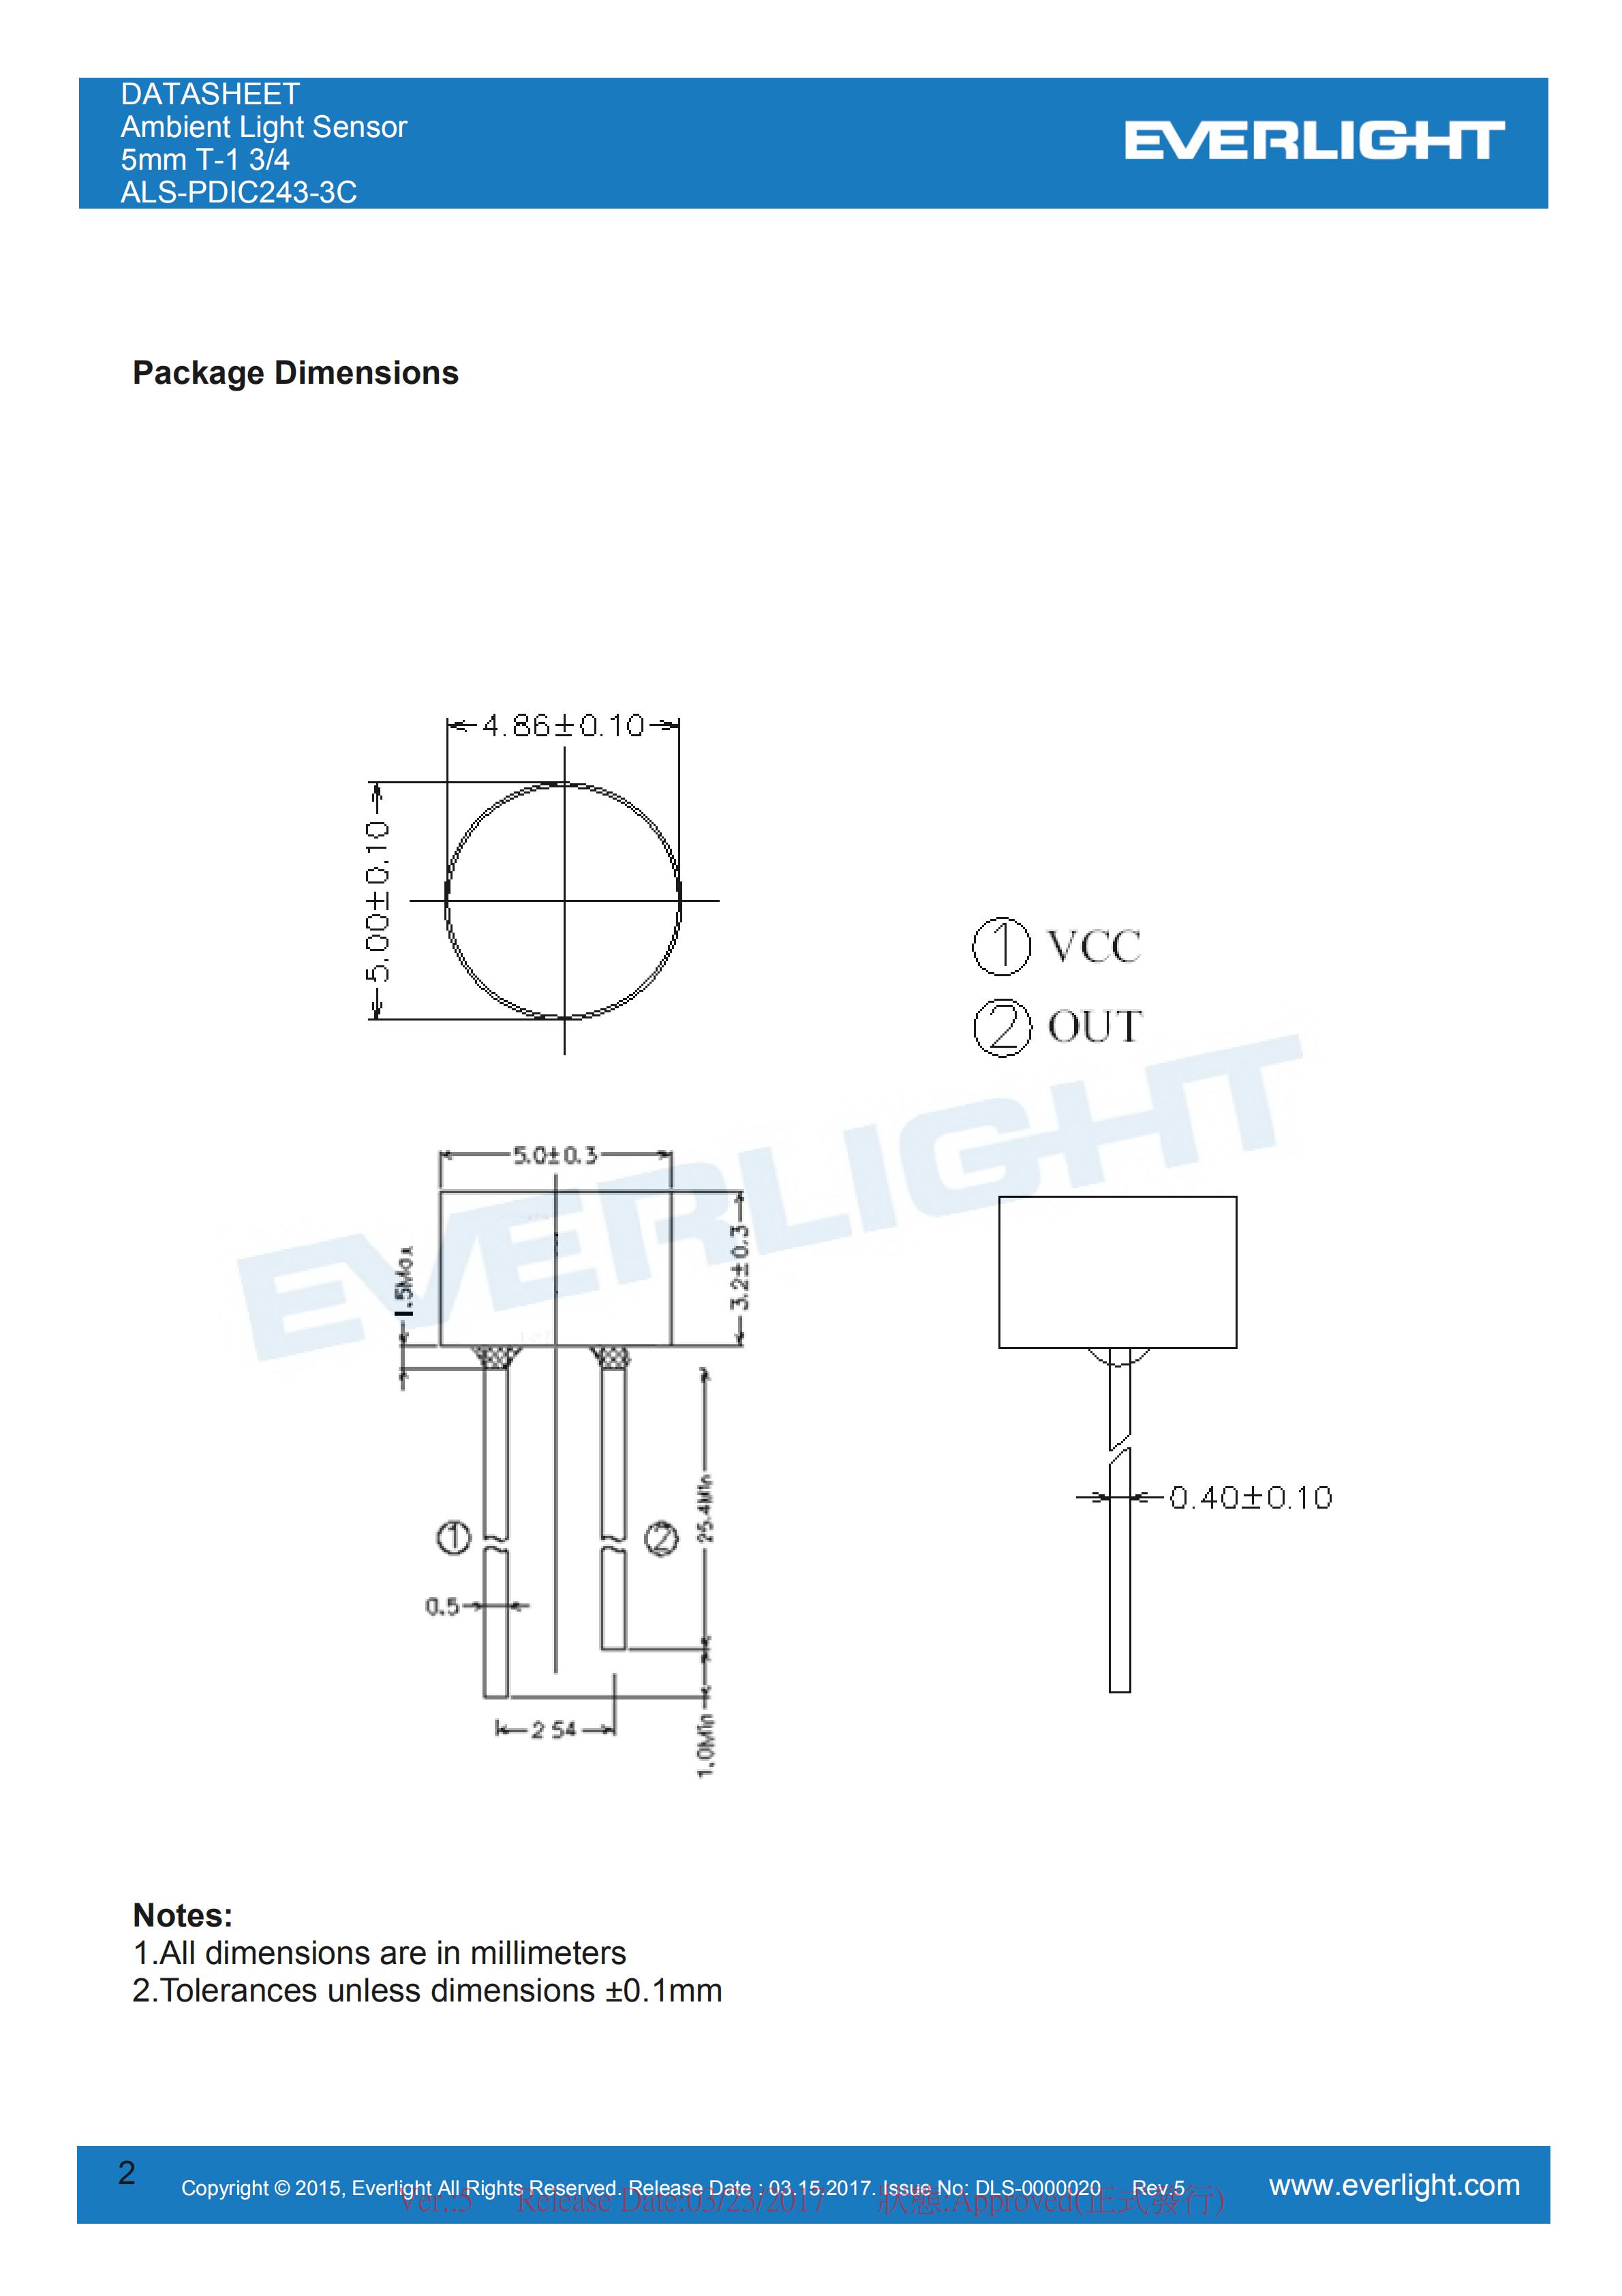 Everlight Ambient Light Sensor ALS-PDIC243-3C Datasheet